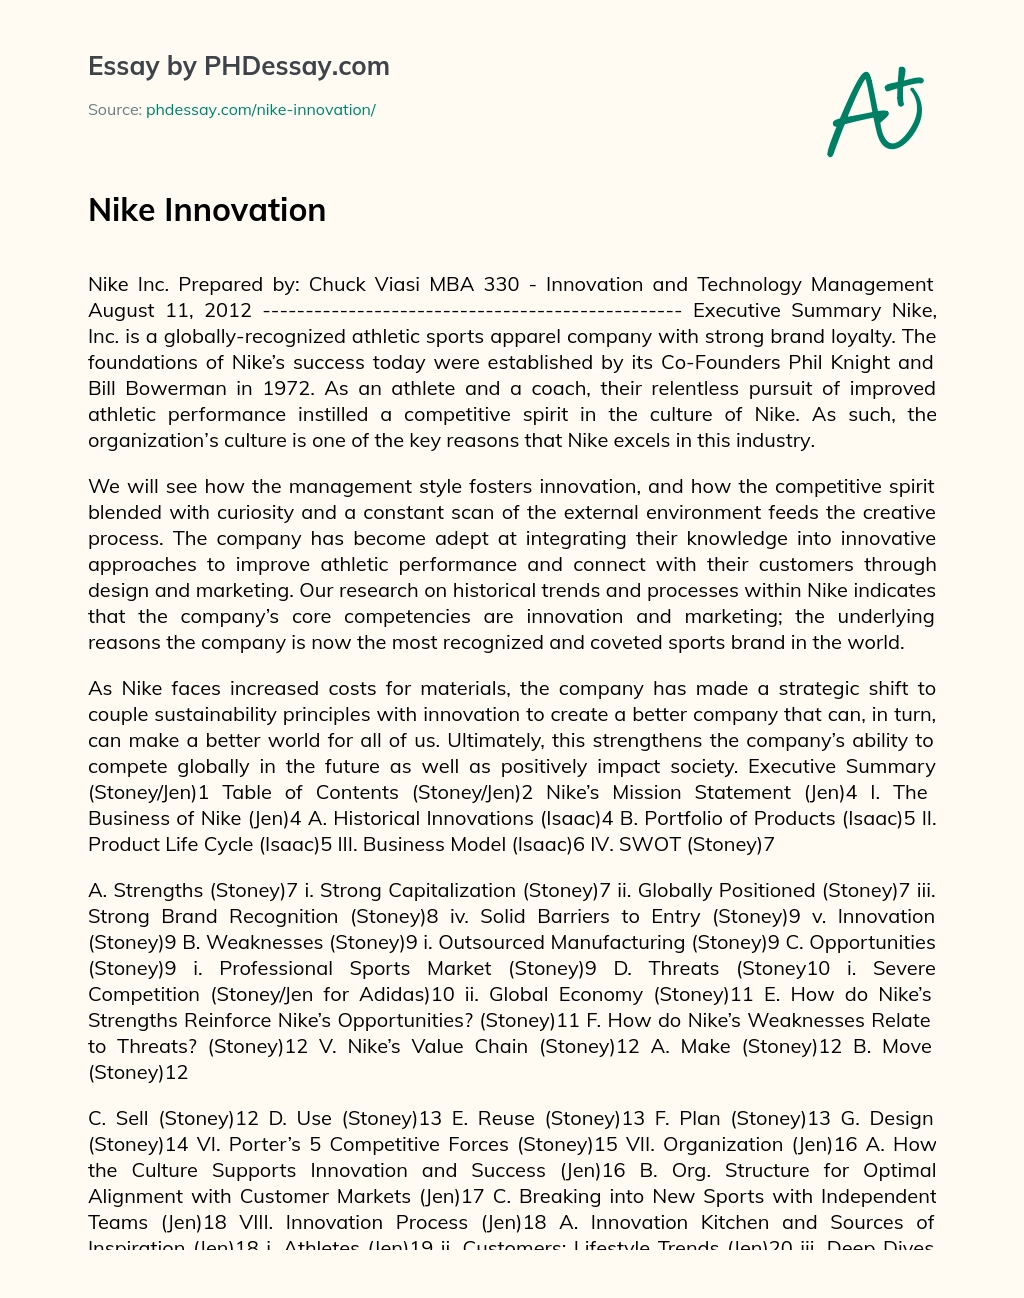 Nike Innovation essay